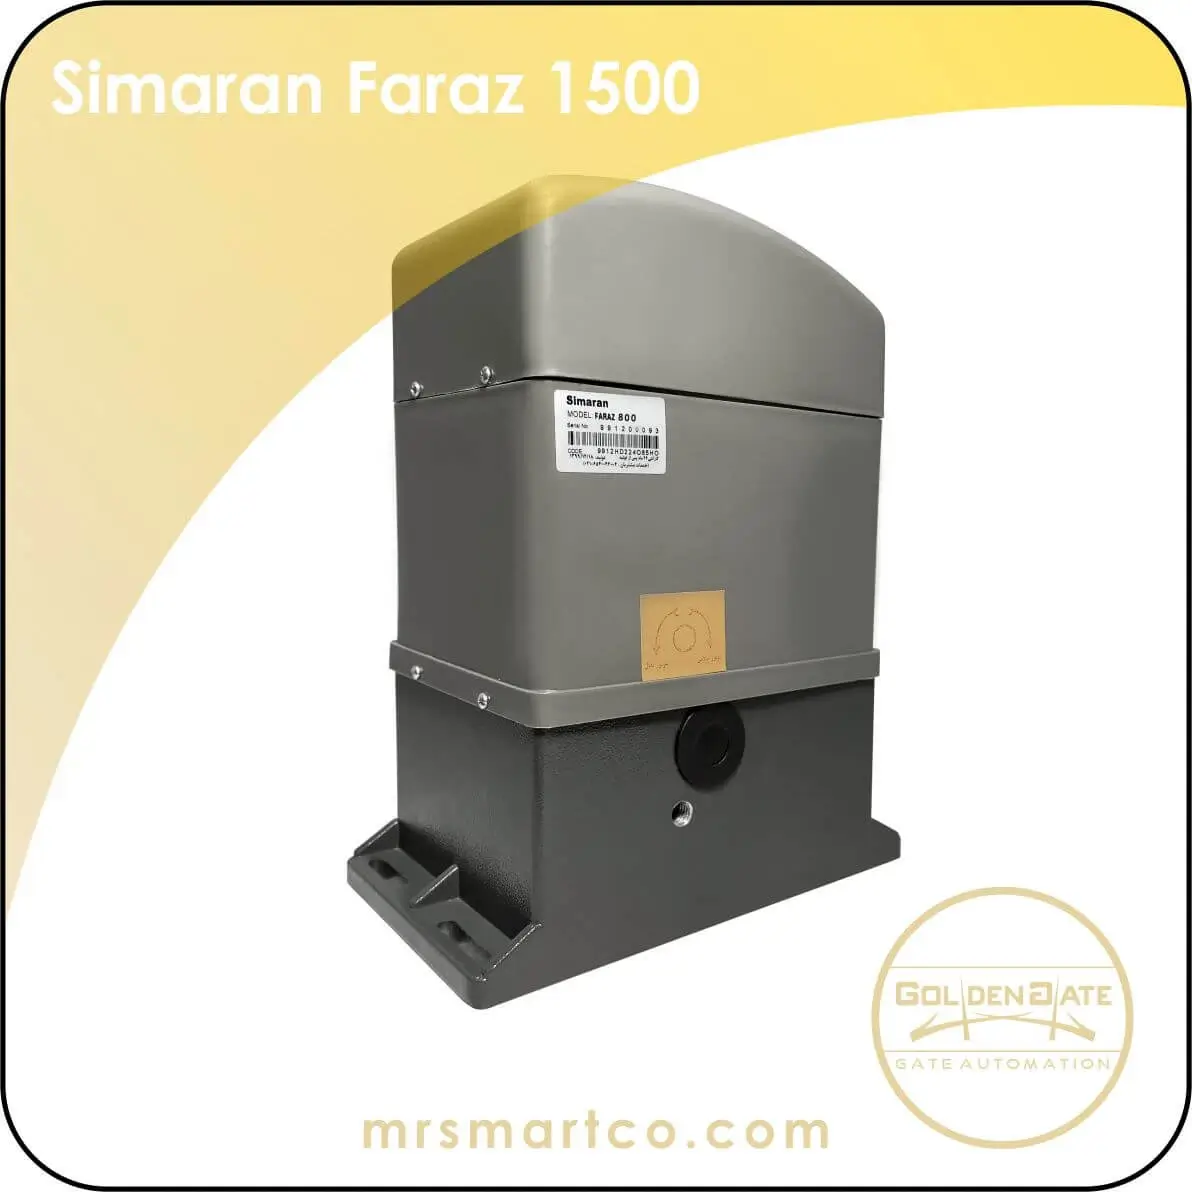 Simaran Faraz 1500